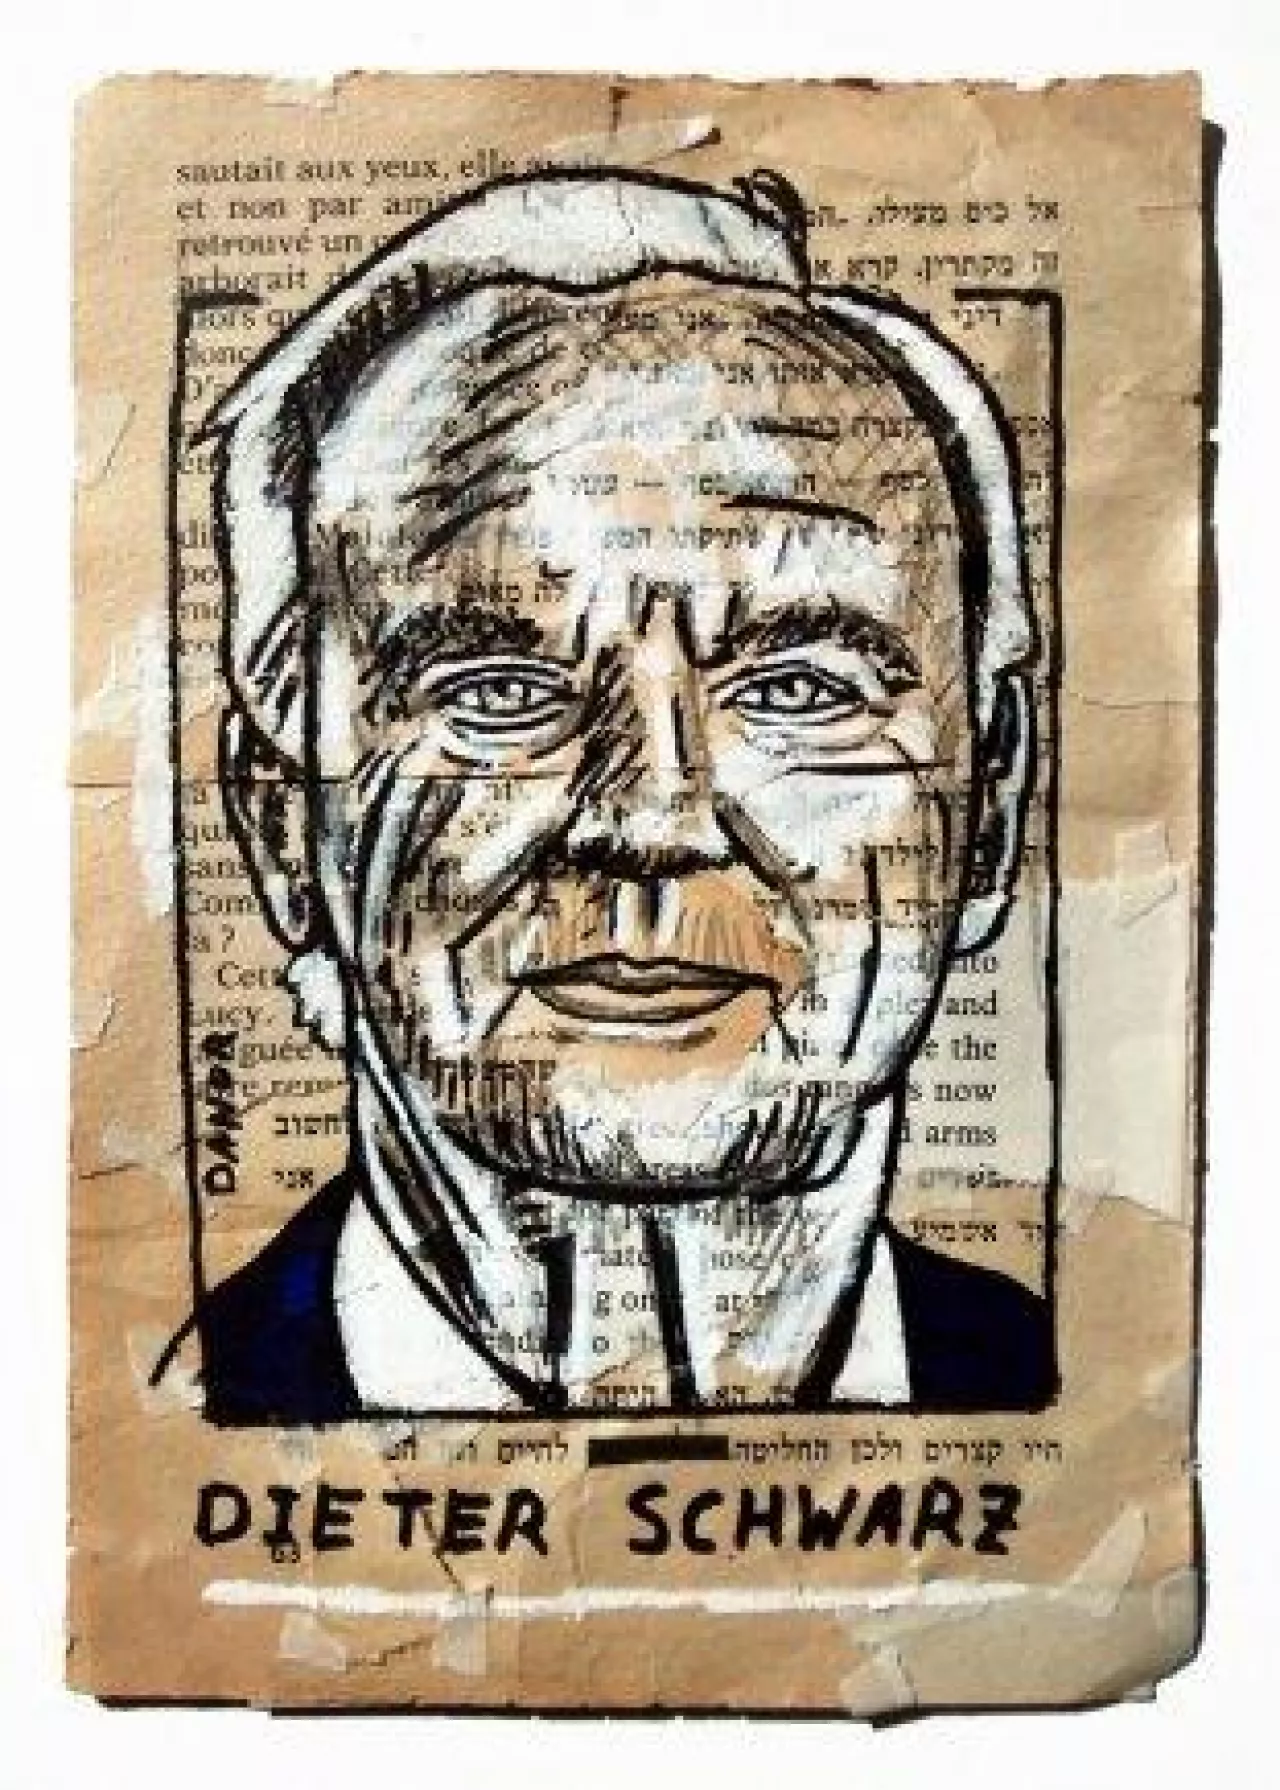 (Dieter Schwarz Portrait Painting Collage By Danor Shtruzman)